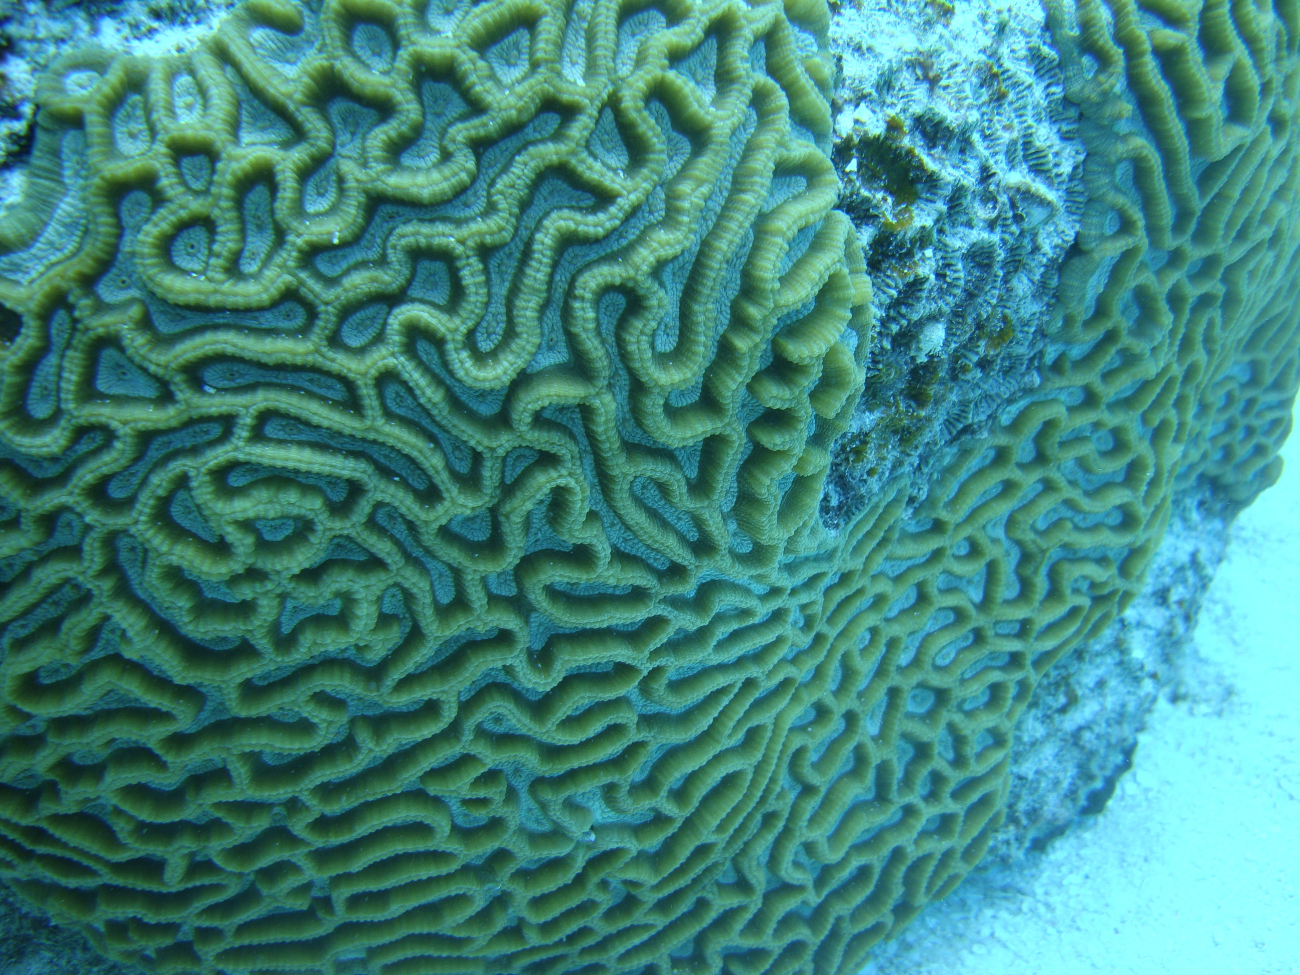 Faviidae coral